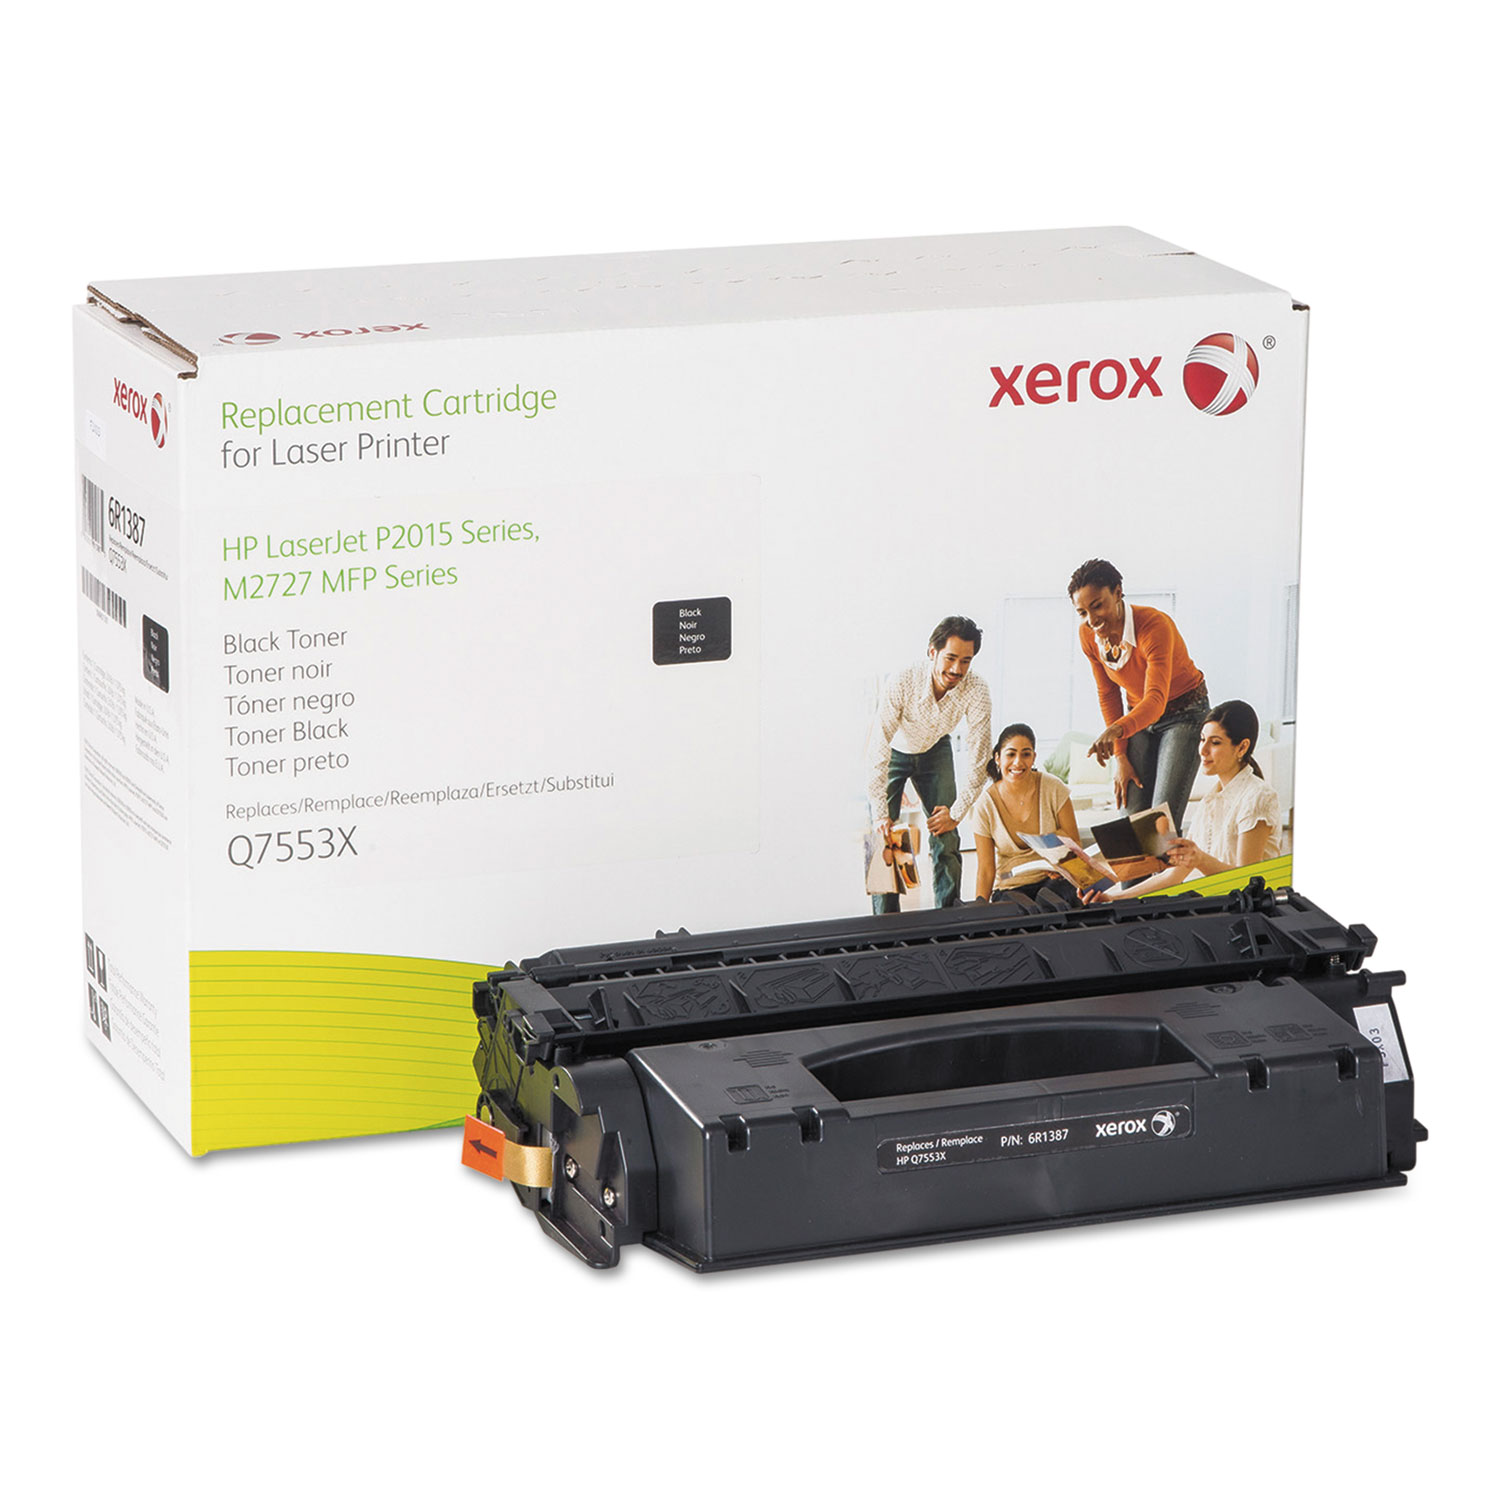  Xerox 006R01387 006R01387 Replacement High-Yield Toner for Q7553X (53X), Black (XER006R01387) 